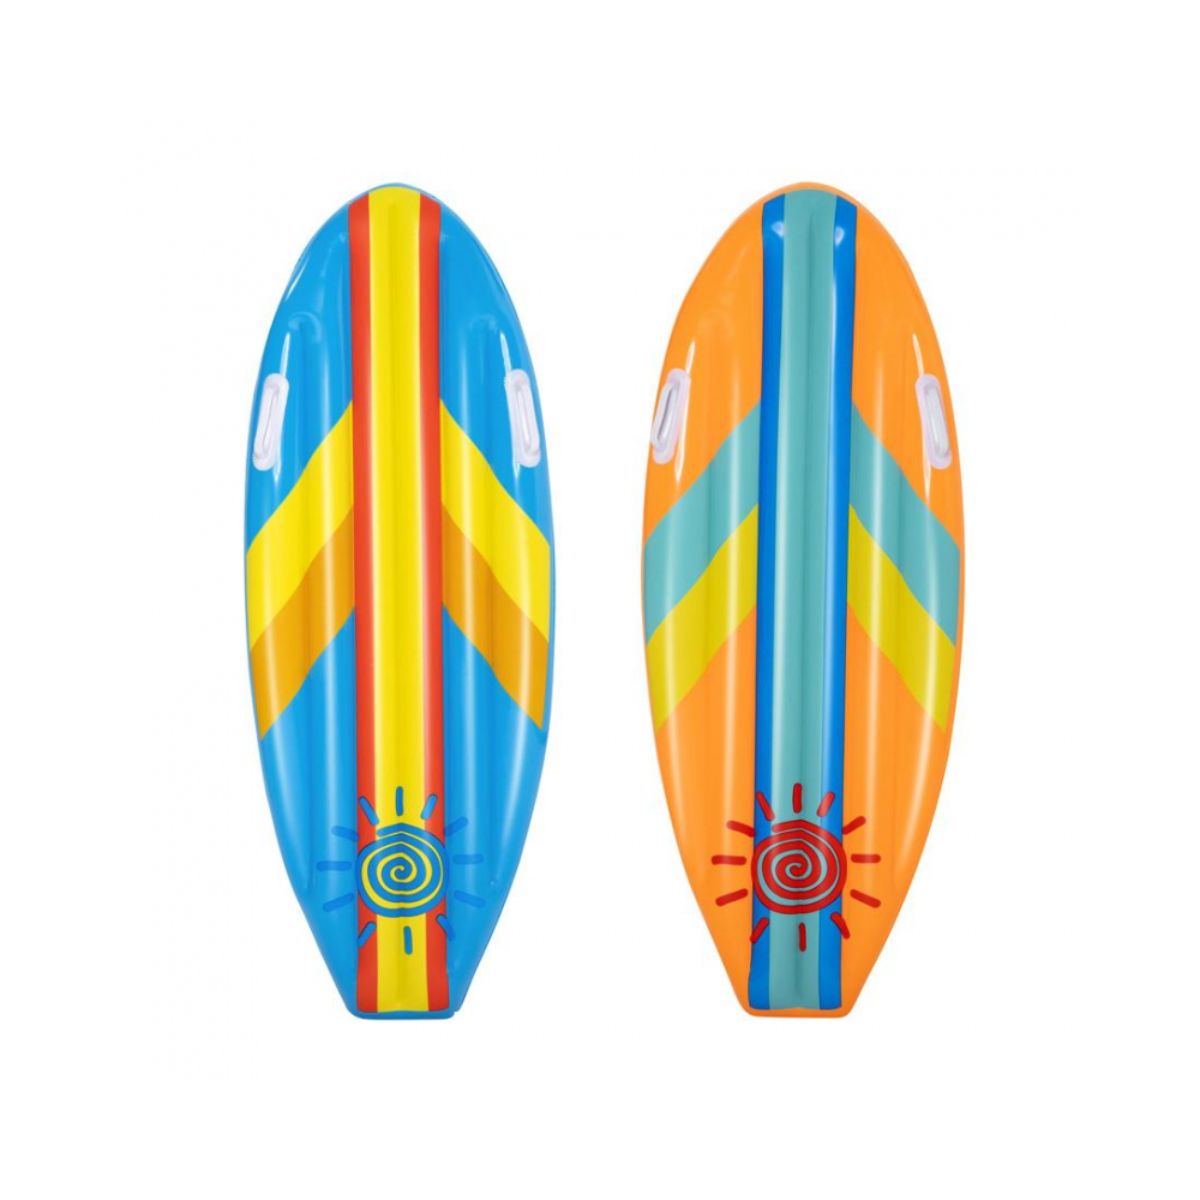 Sport si activitati in aer liber - Saltea gonflabilă tip placa de surf Bestway Sunny Surf, 114x46 cm, hectarul.ro